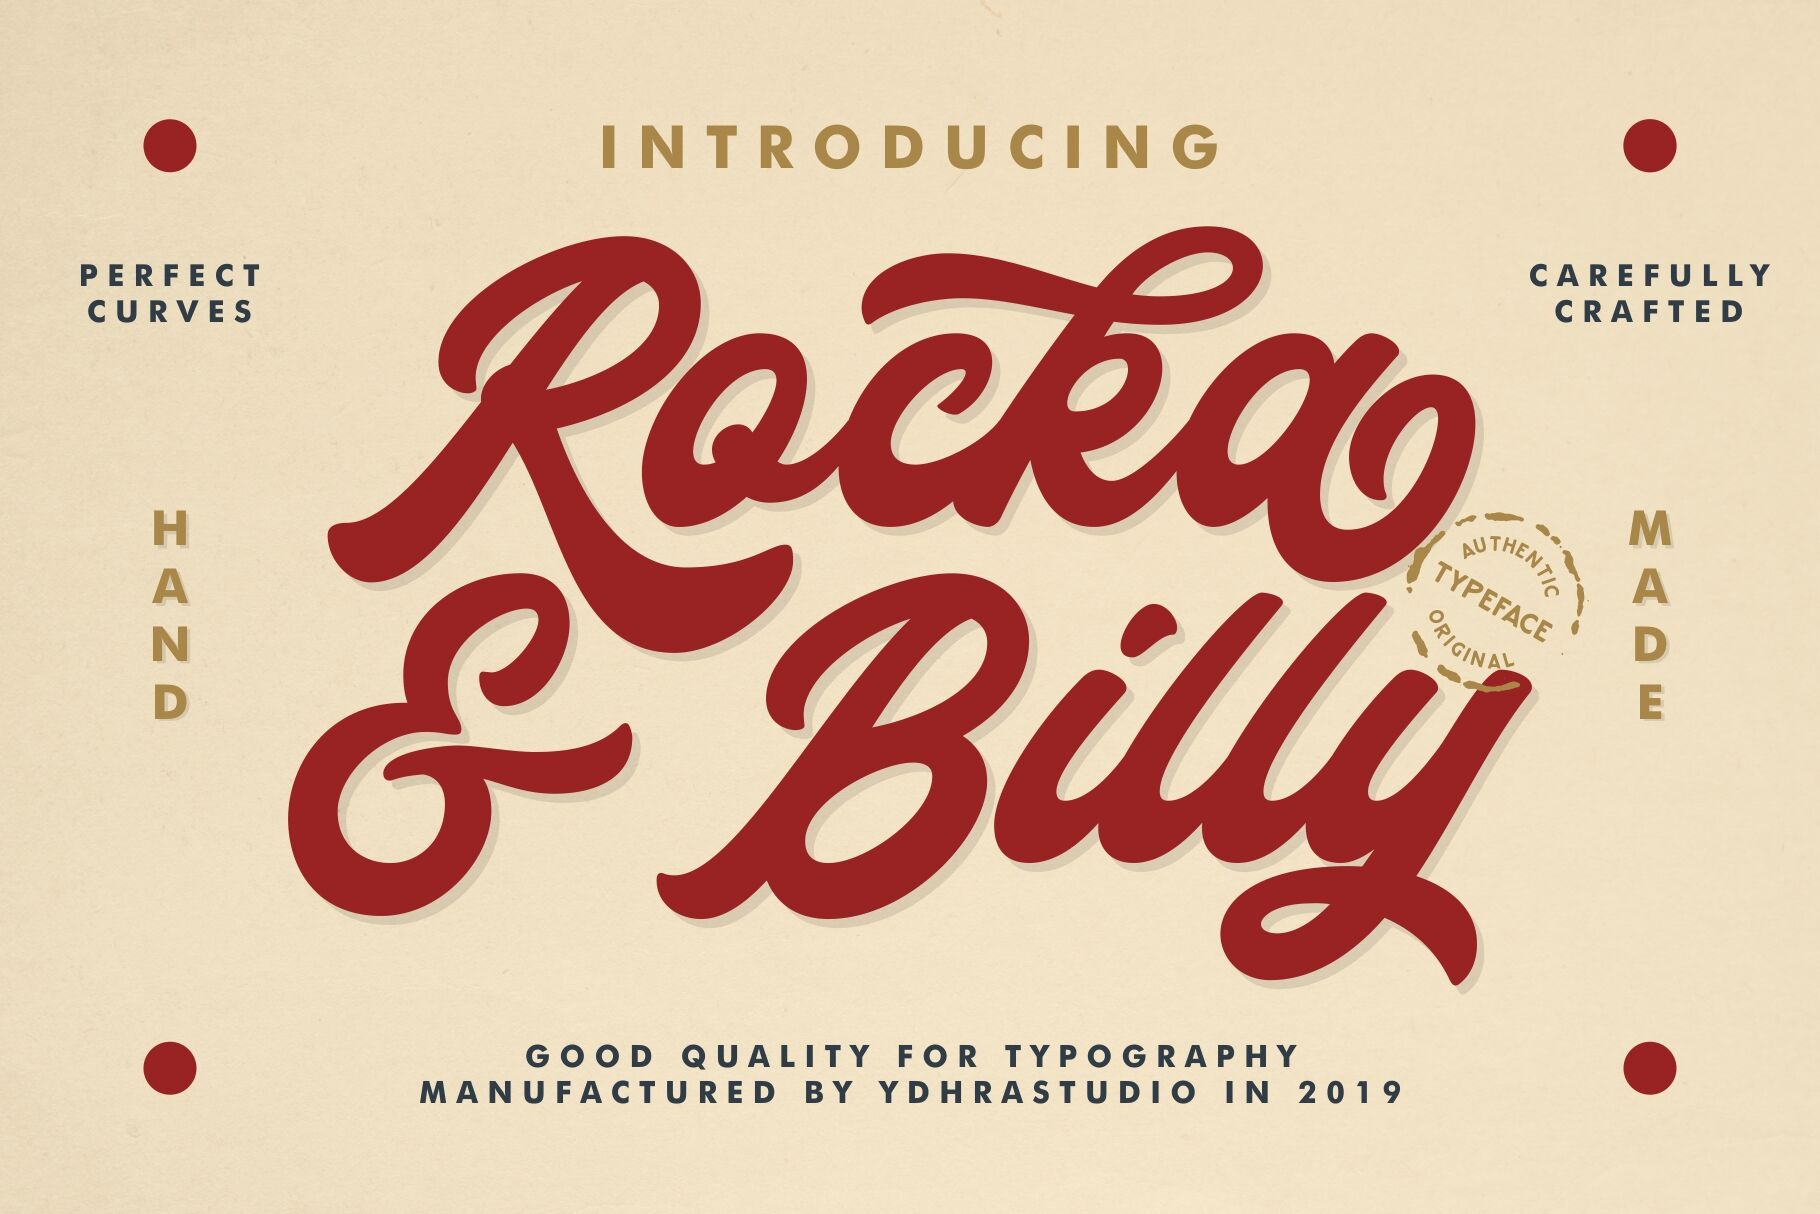 Rocka Billy Bold Script Font By Ydhra Studio Thehungryjpeg Com